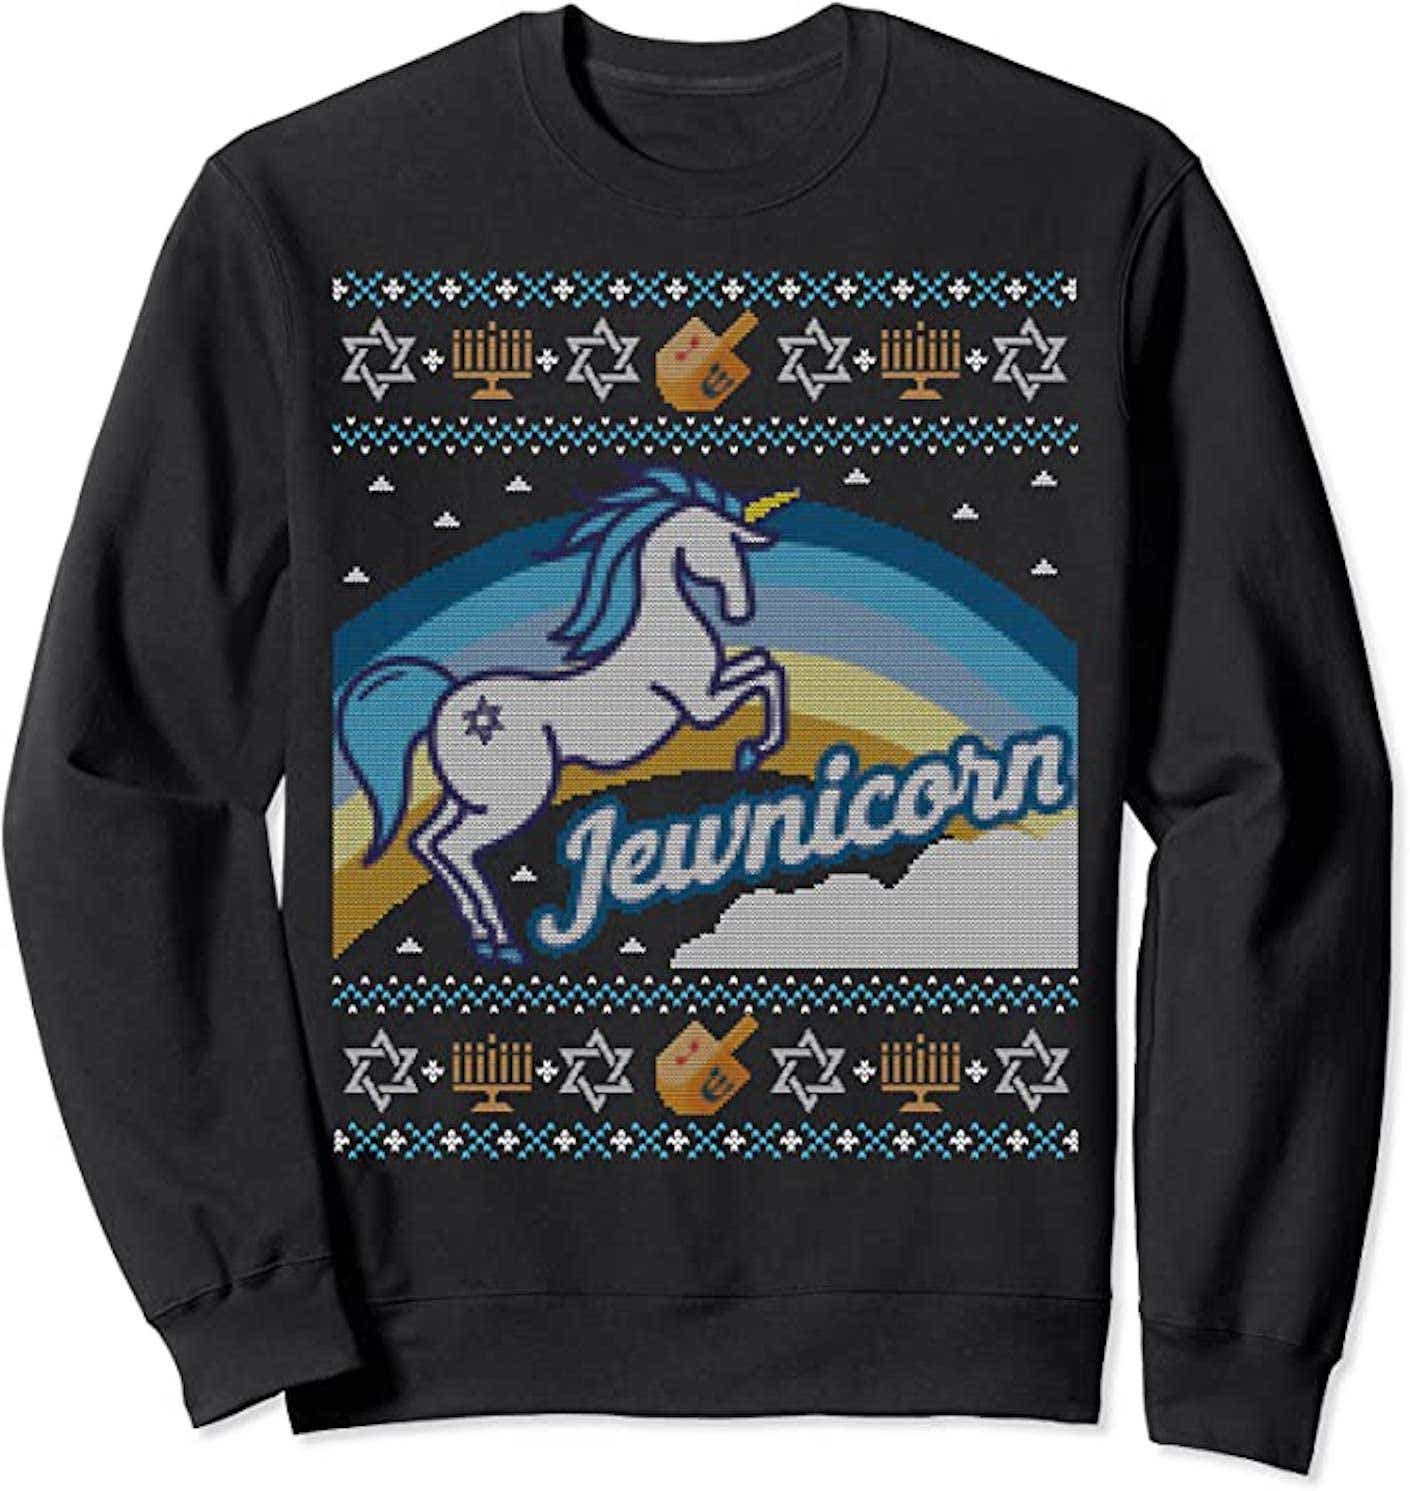 funny ugly holiday Jewnicorn sweater